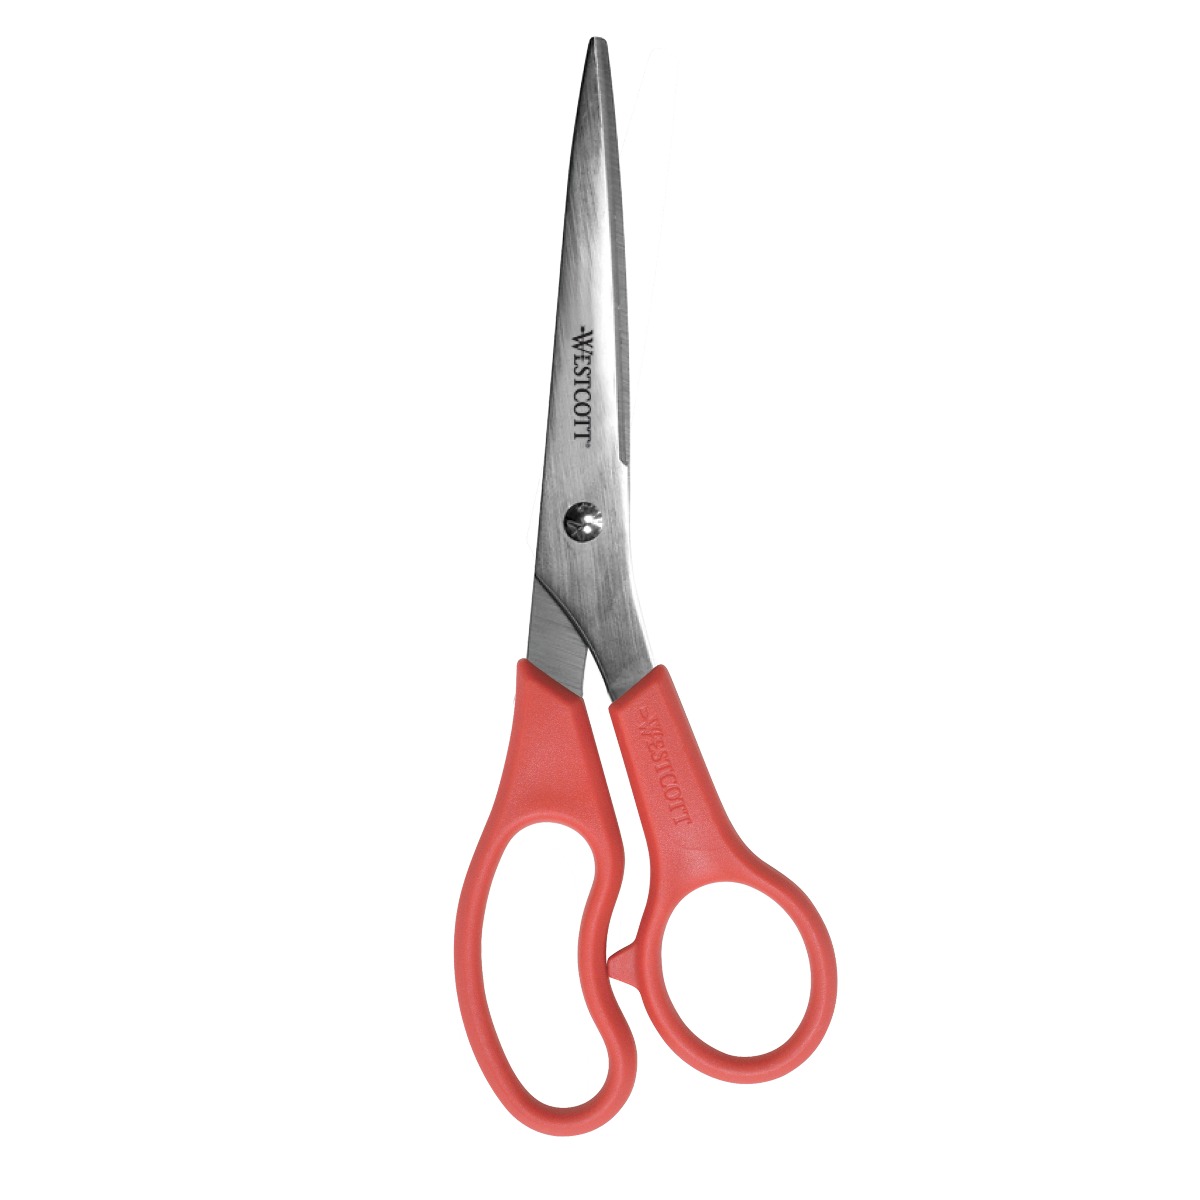 Westcott All Purpose Value Stainless Steel Scissors, 8", Red (40618)